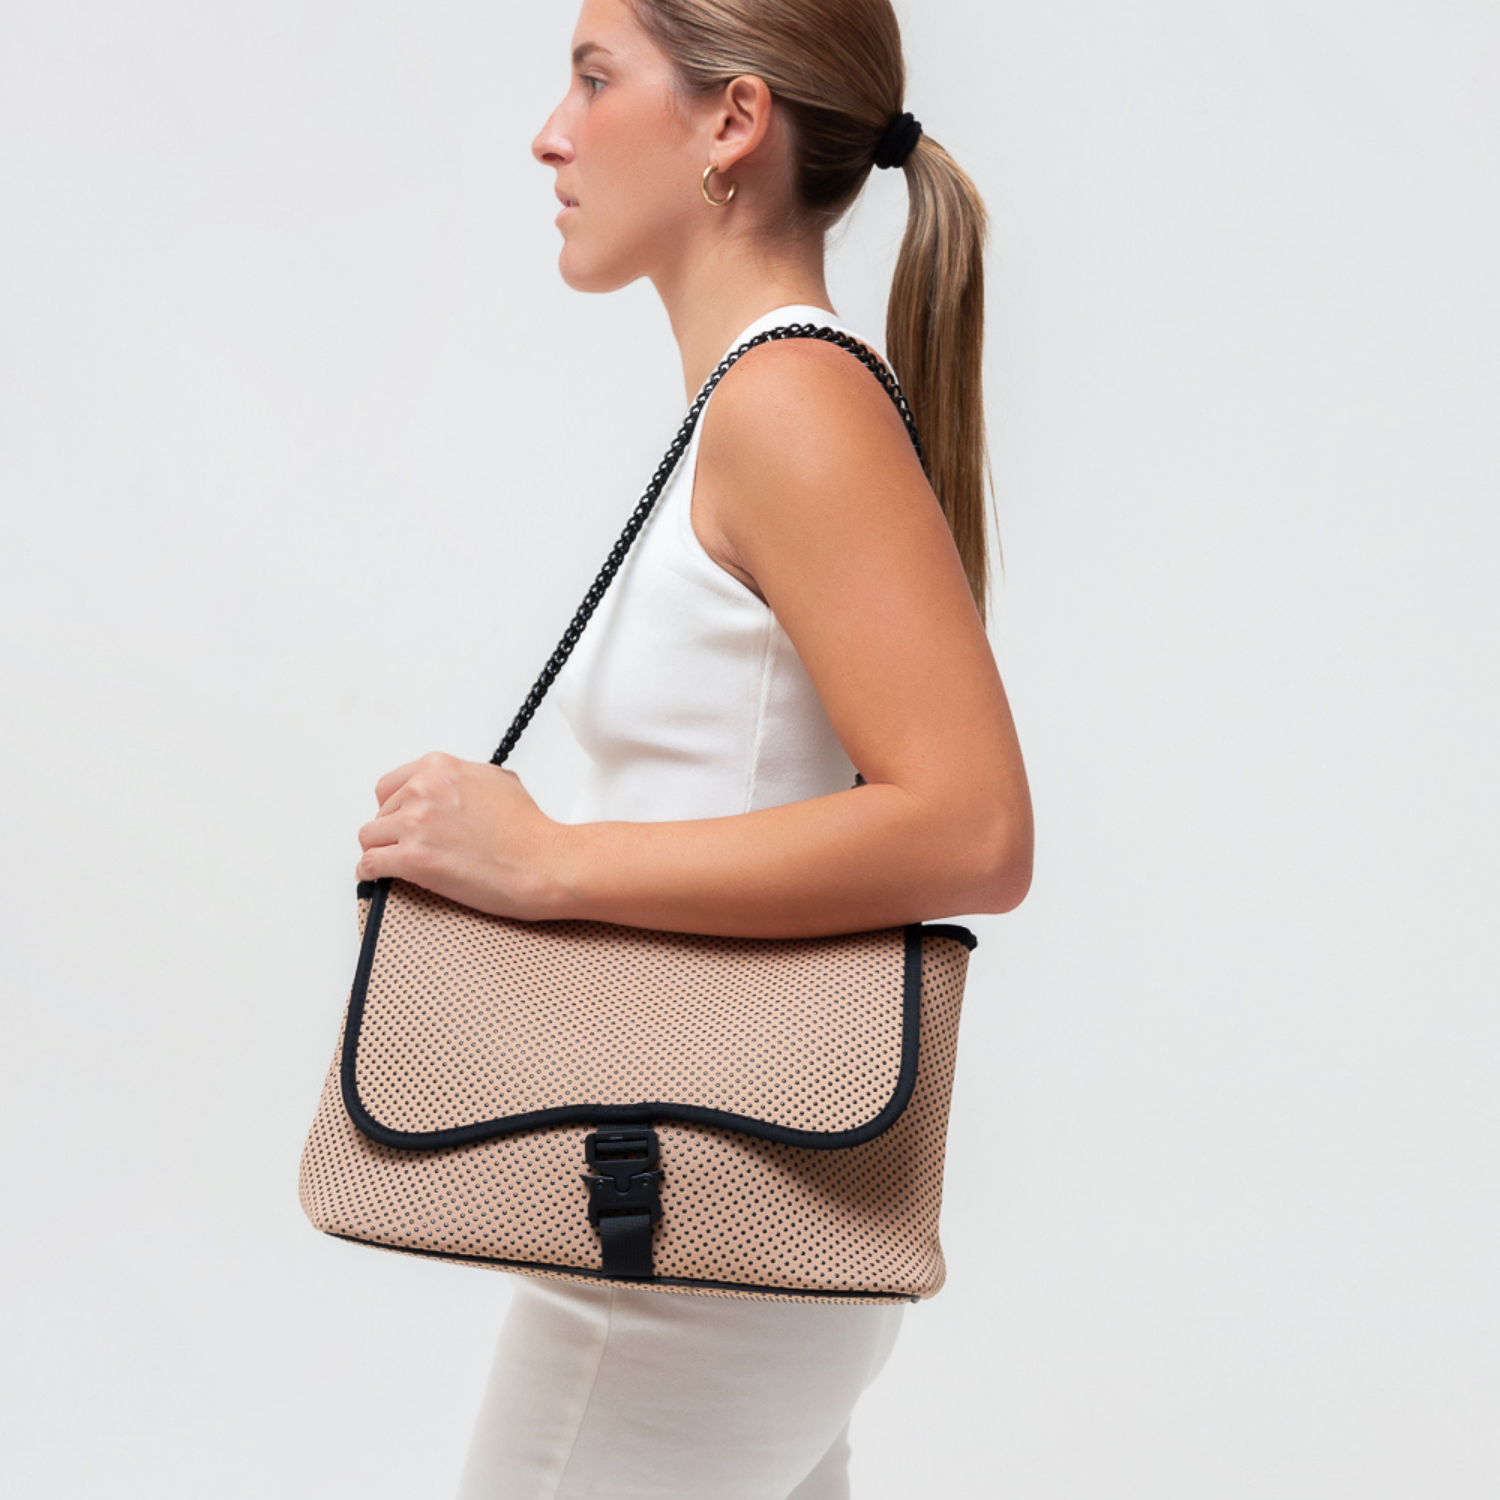 WOONAM Women Fashion Handbag Leather Satchel Messenger Small Flap